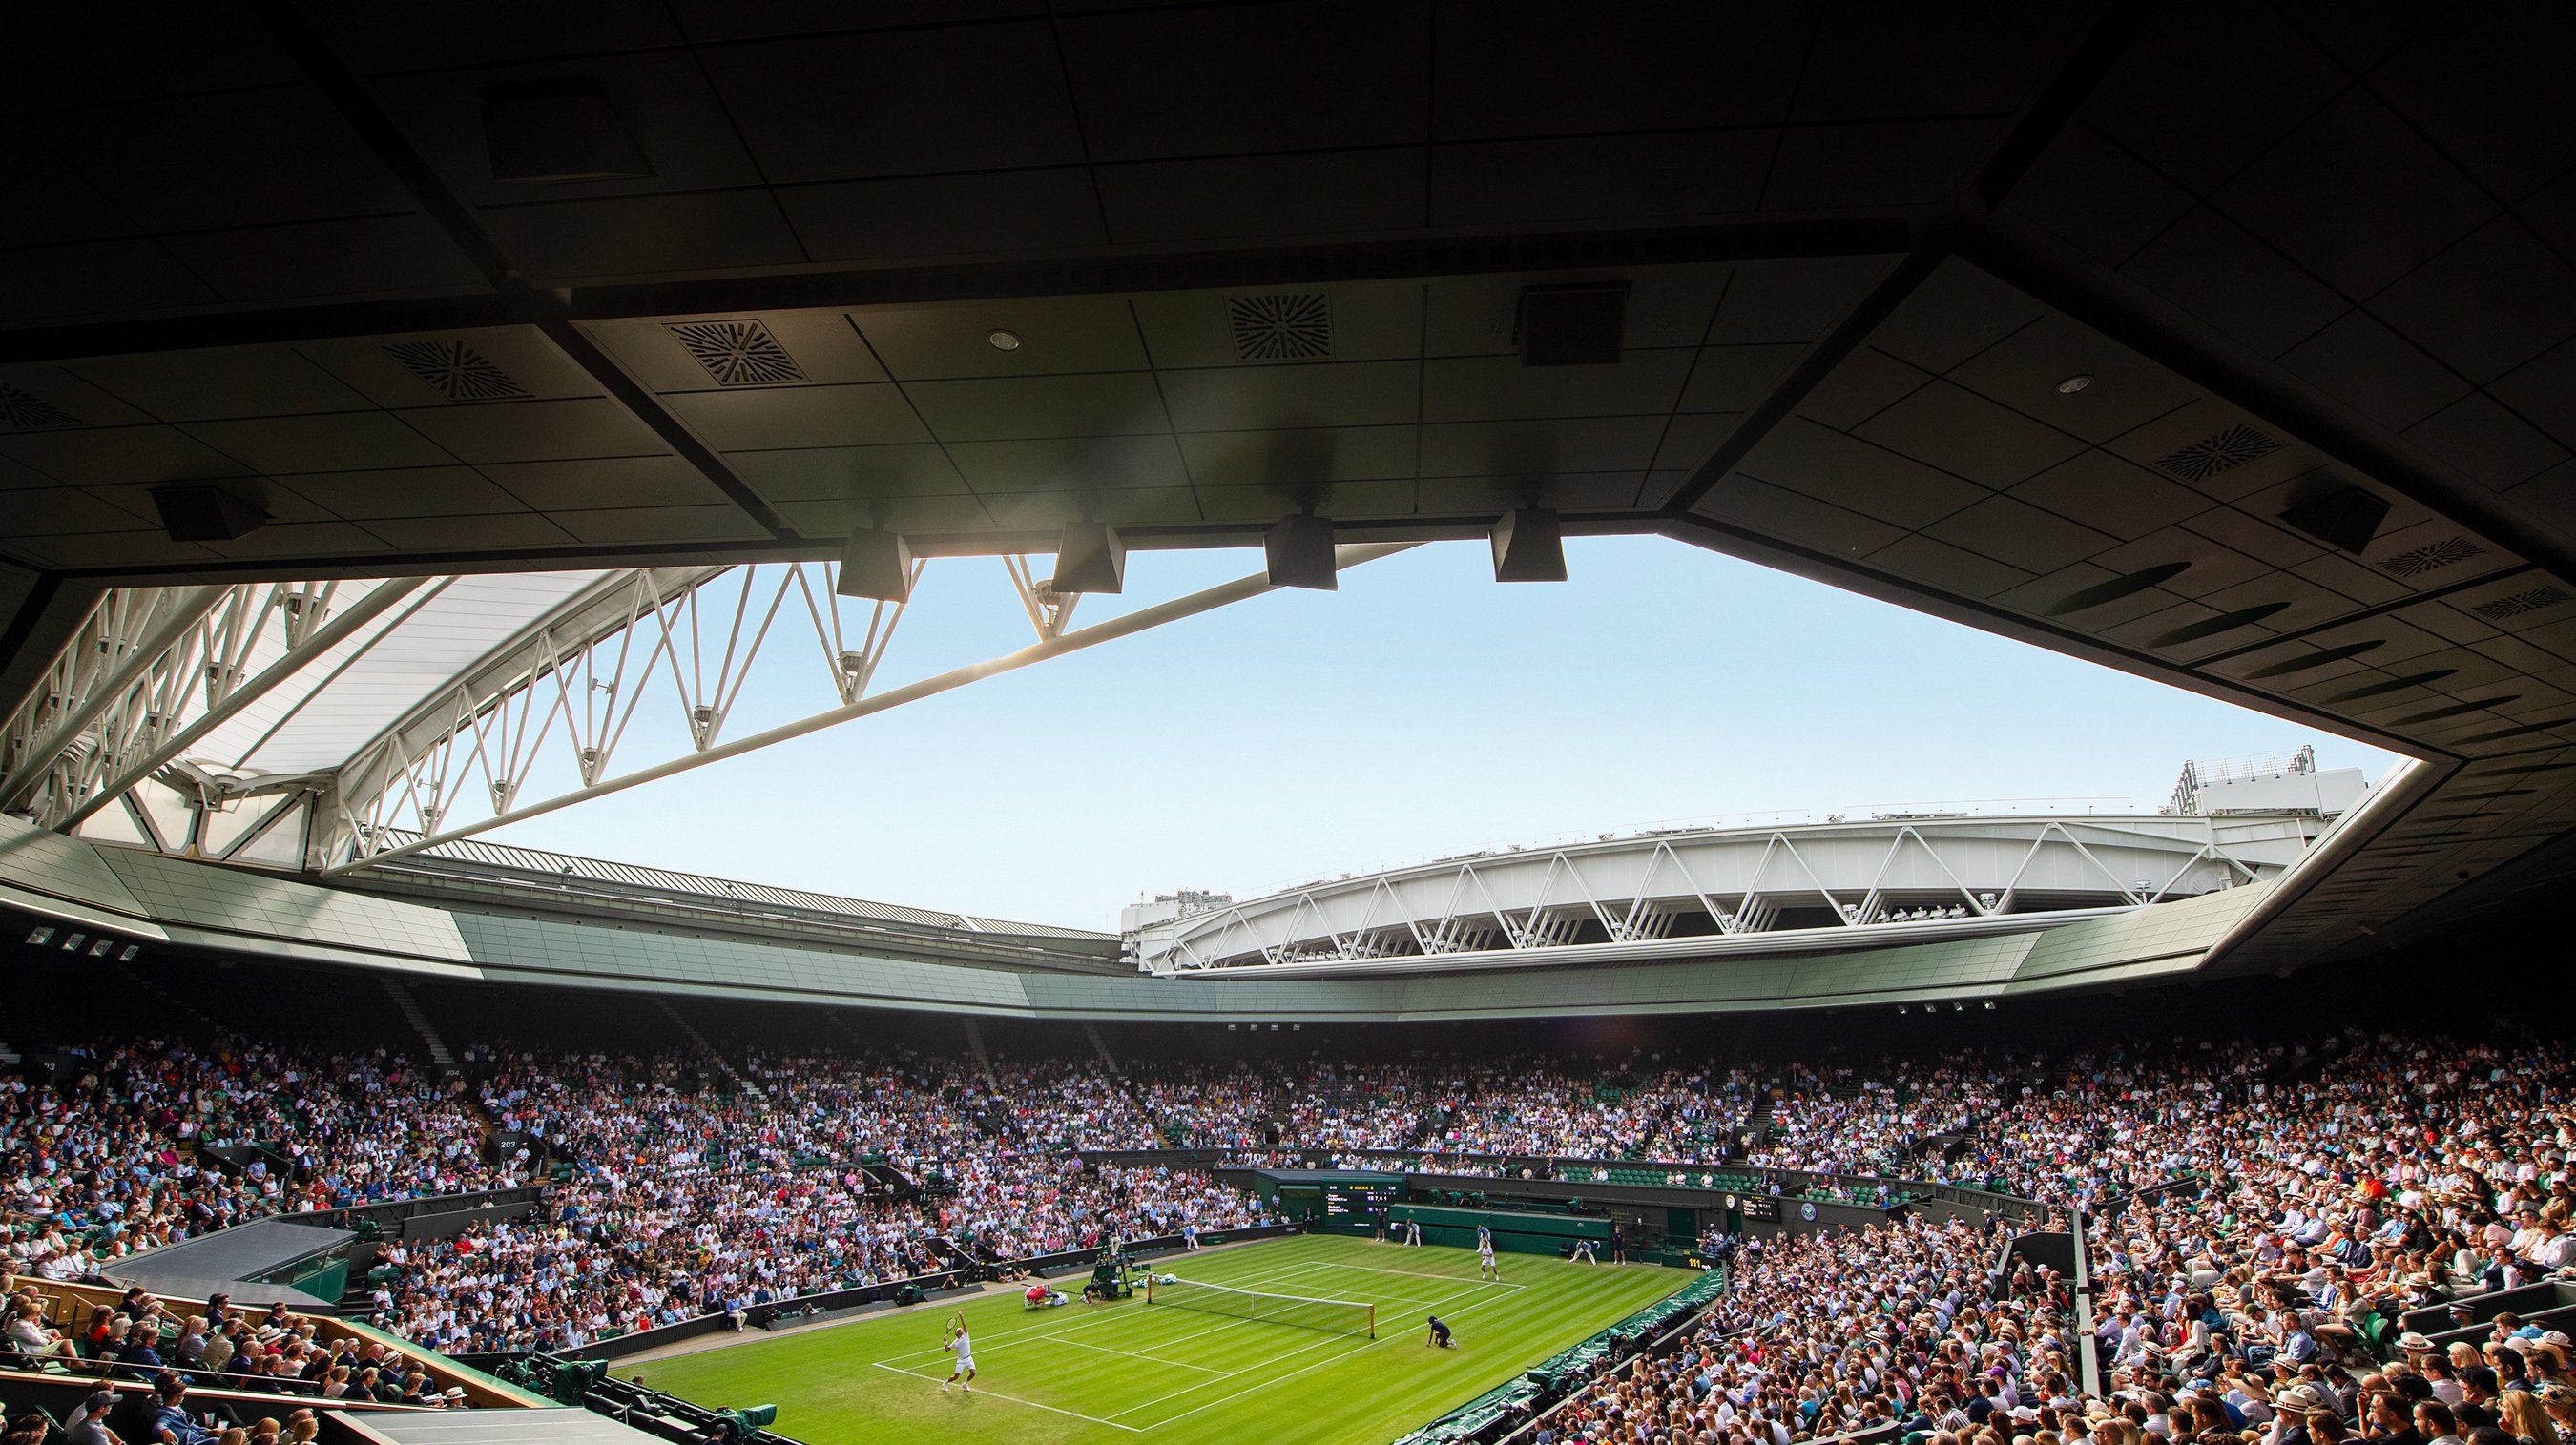 
Estadio de Tennis Wimbledon